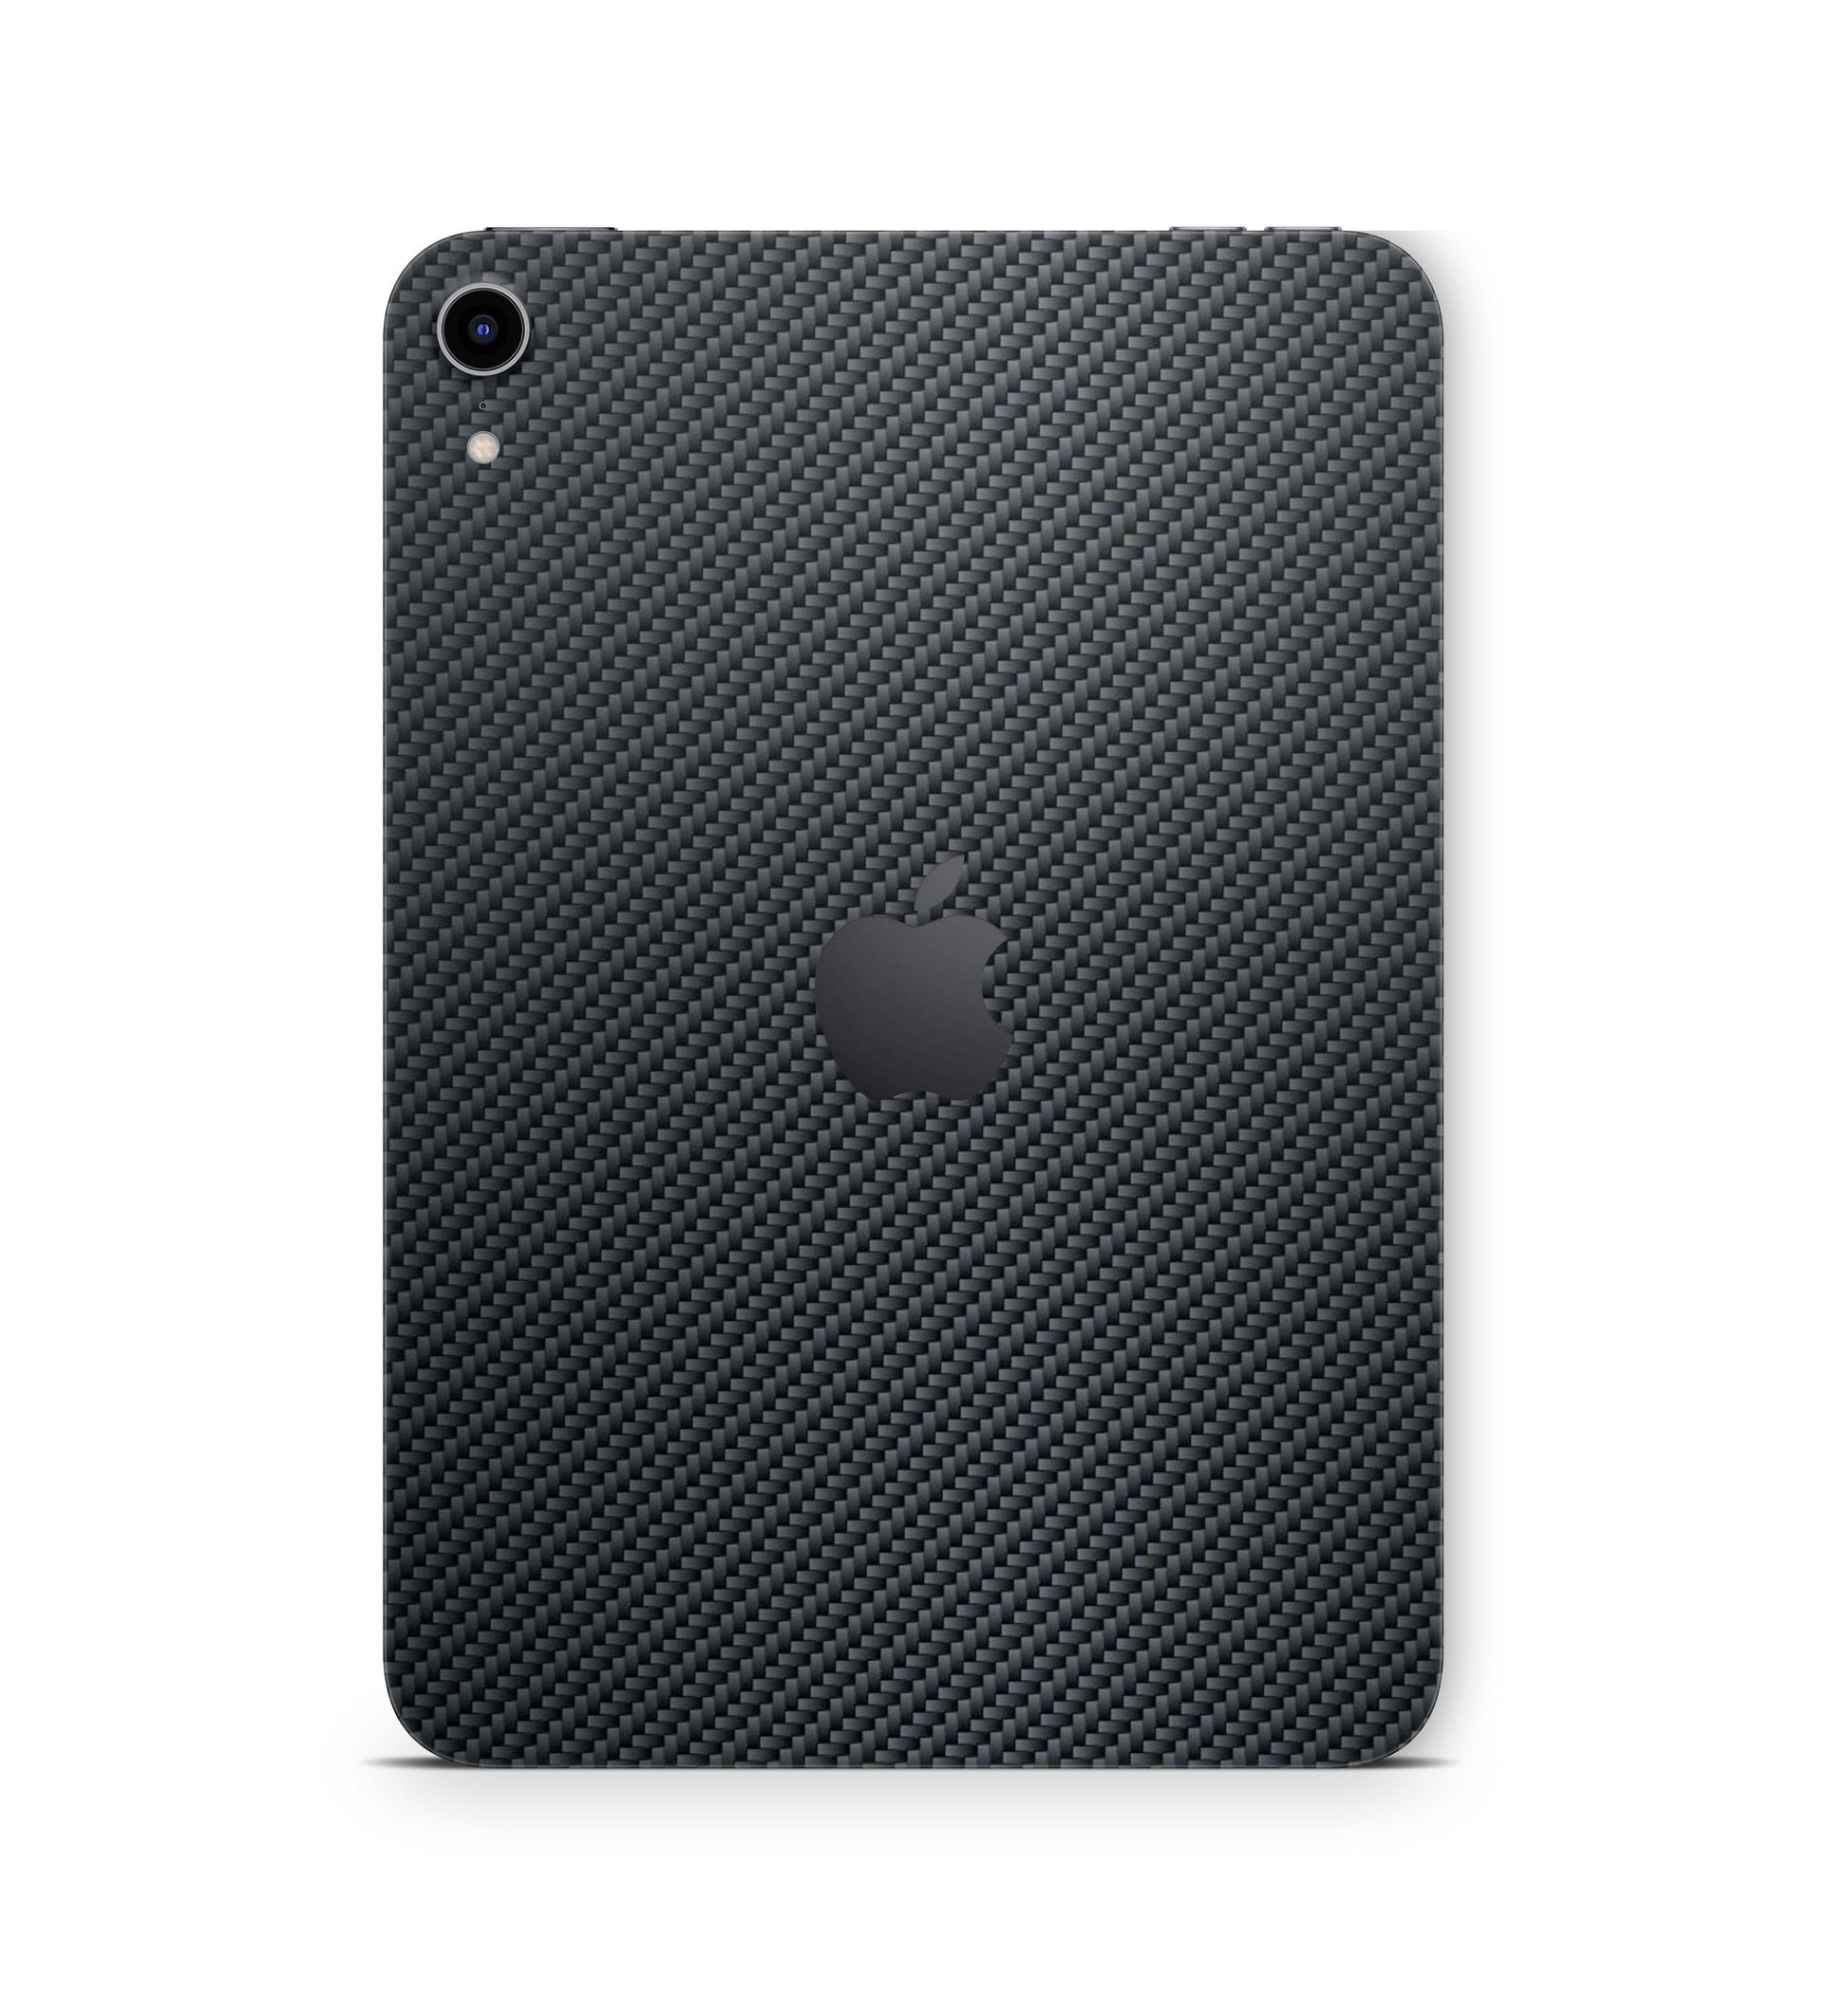 iPad Mini Skin Design Cover Folie Vinyl Skins & Wraps für alle iPad Mini Modelle Aufkleber Skins4u Carbon  